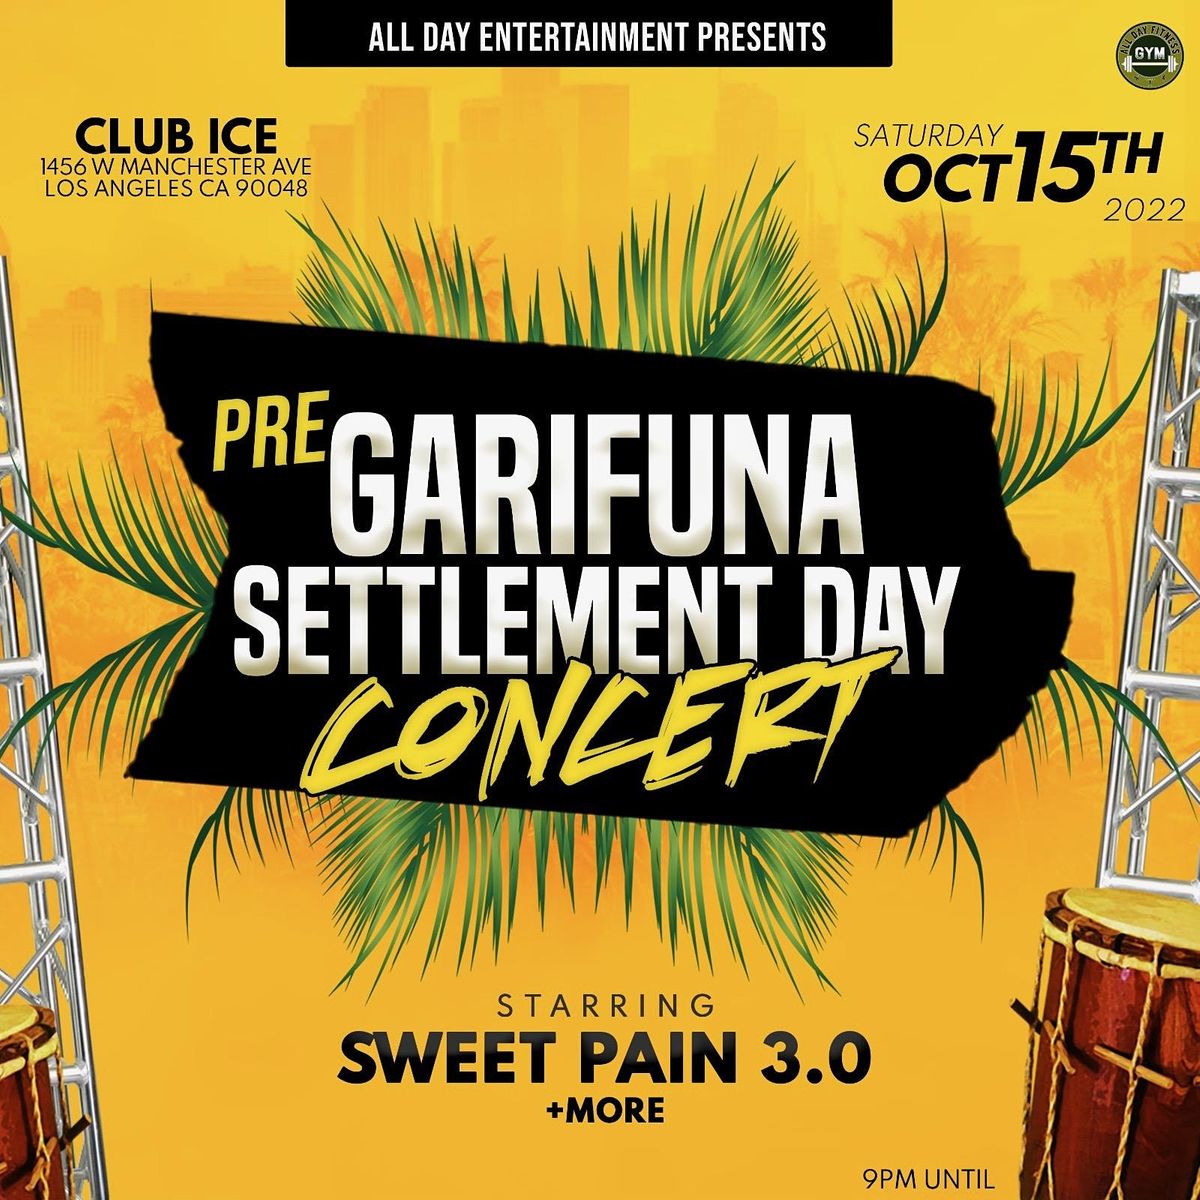 Pre-Garifuna Settlement Day Concert